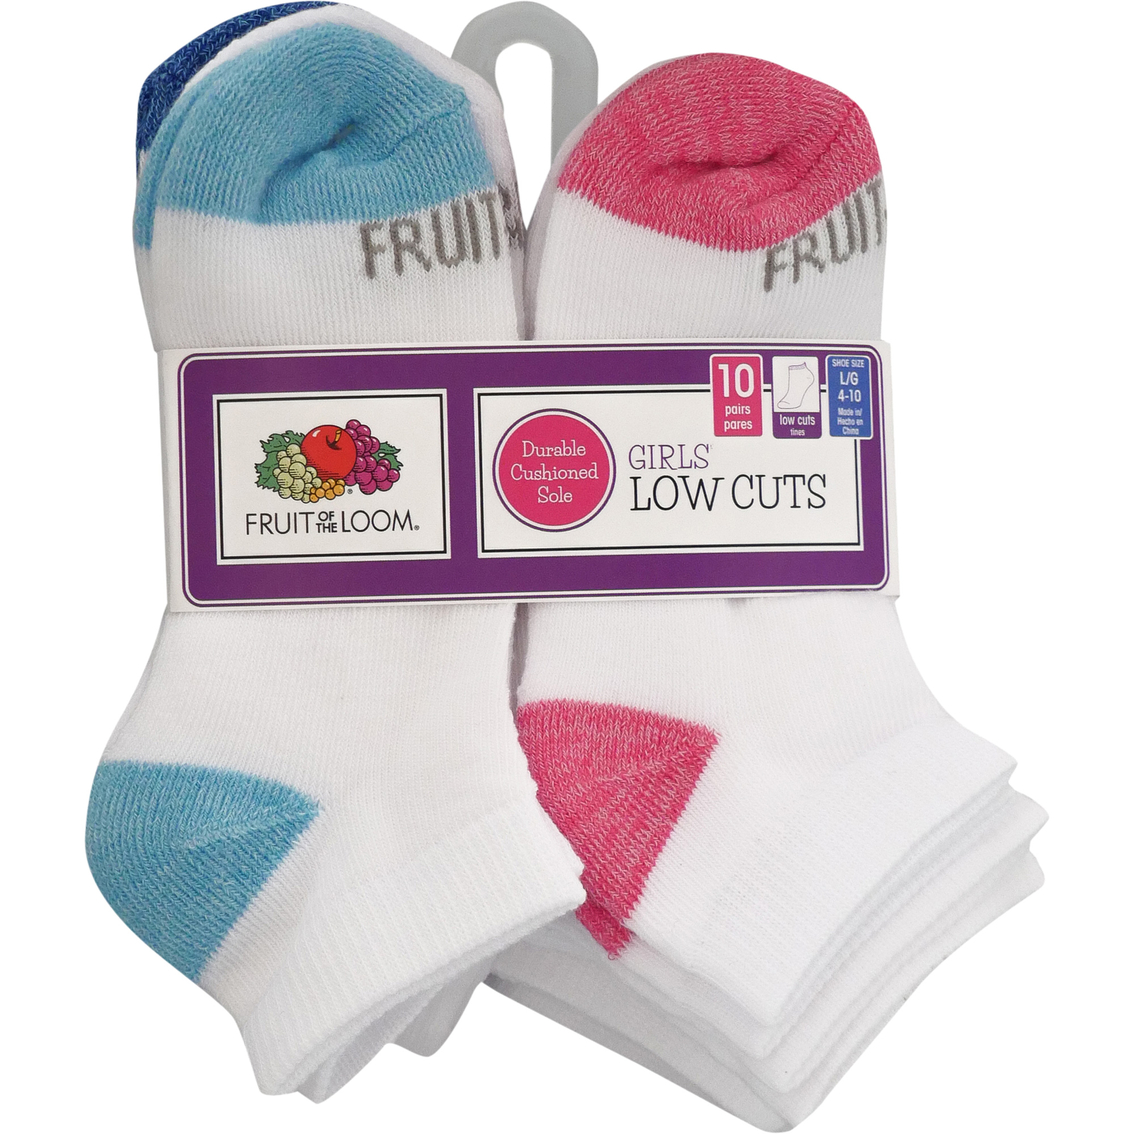 Fruit of the Loom Girls Low Cut Socks, 10 Pk. - Image 2 of 5